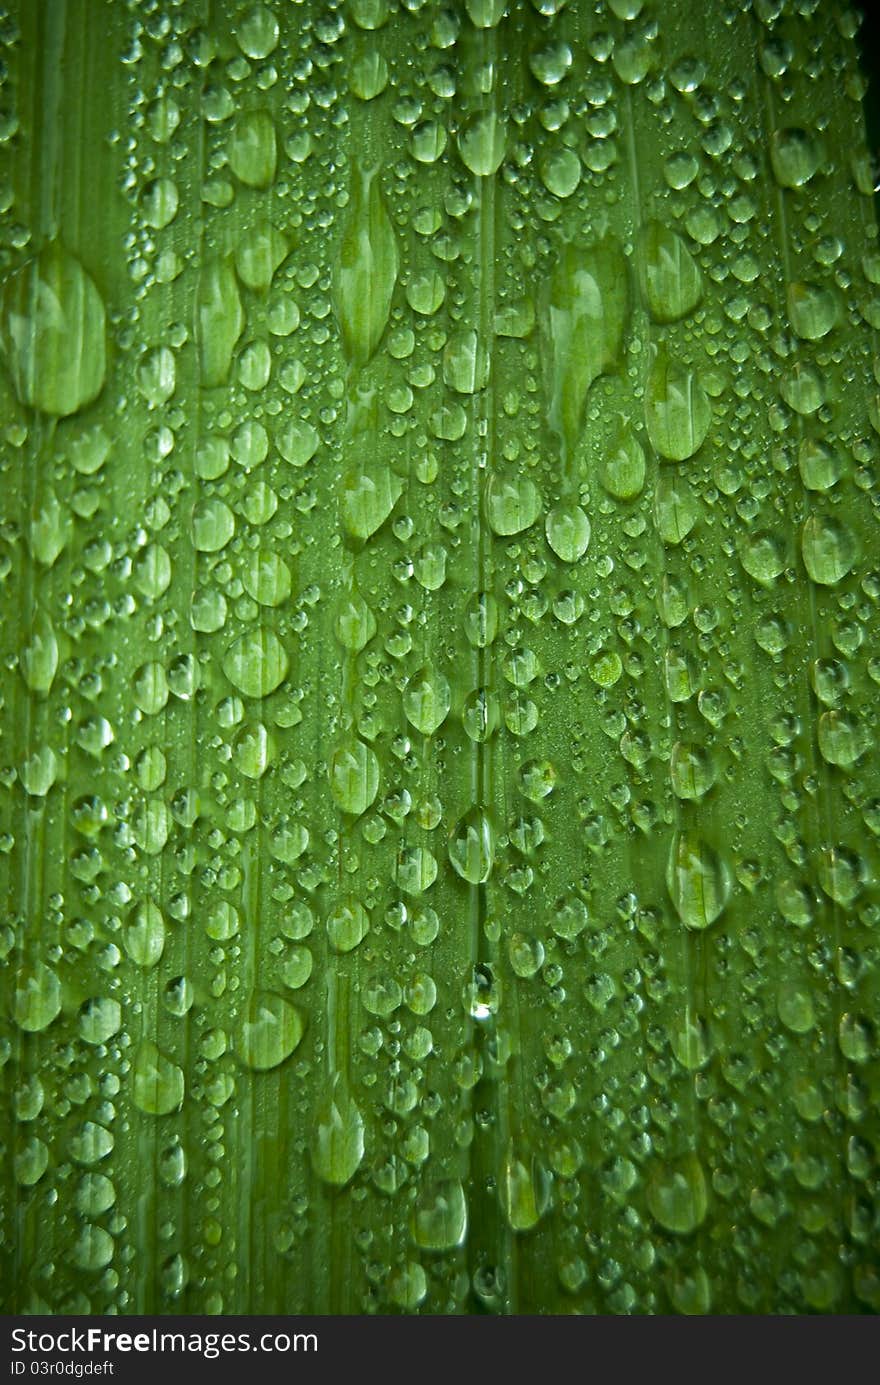 Drops of rain on a large green leaf. Good background image, Macro shot. Drops of rain on a large green leaf. Good background image, Macro shot.